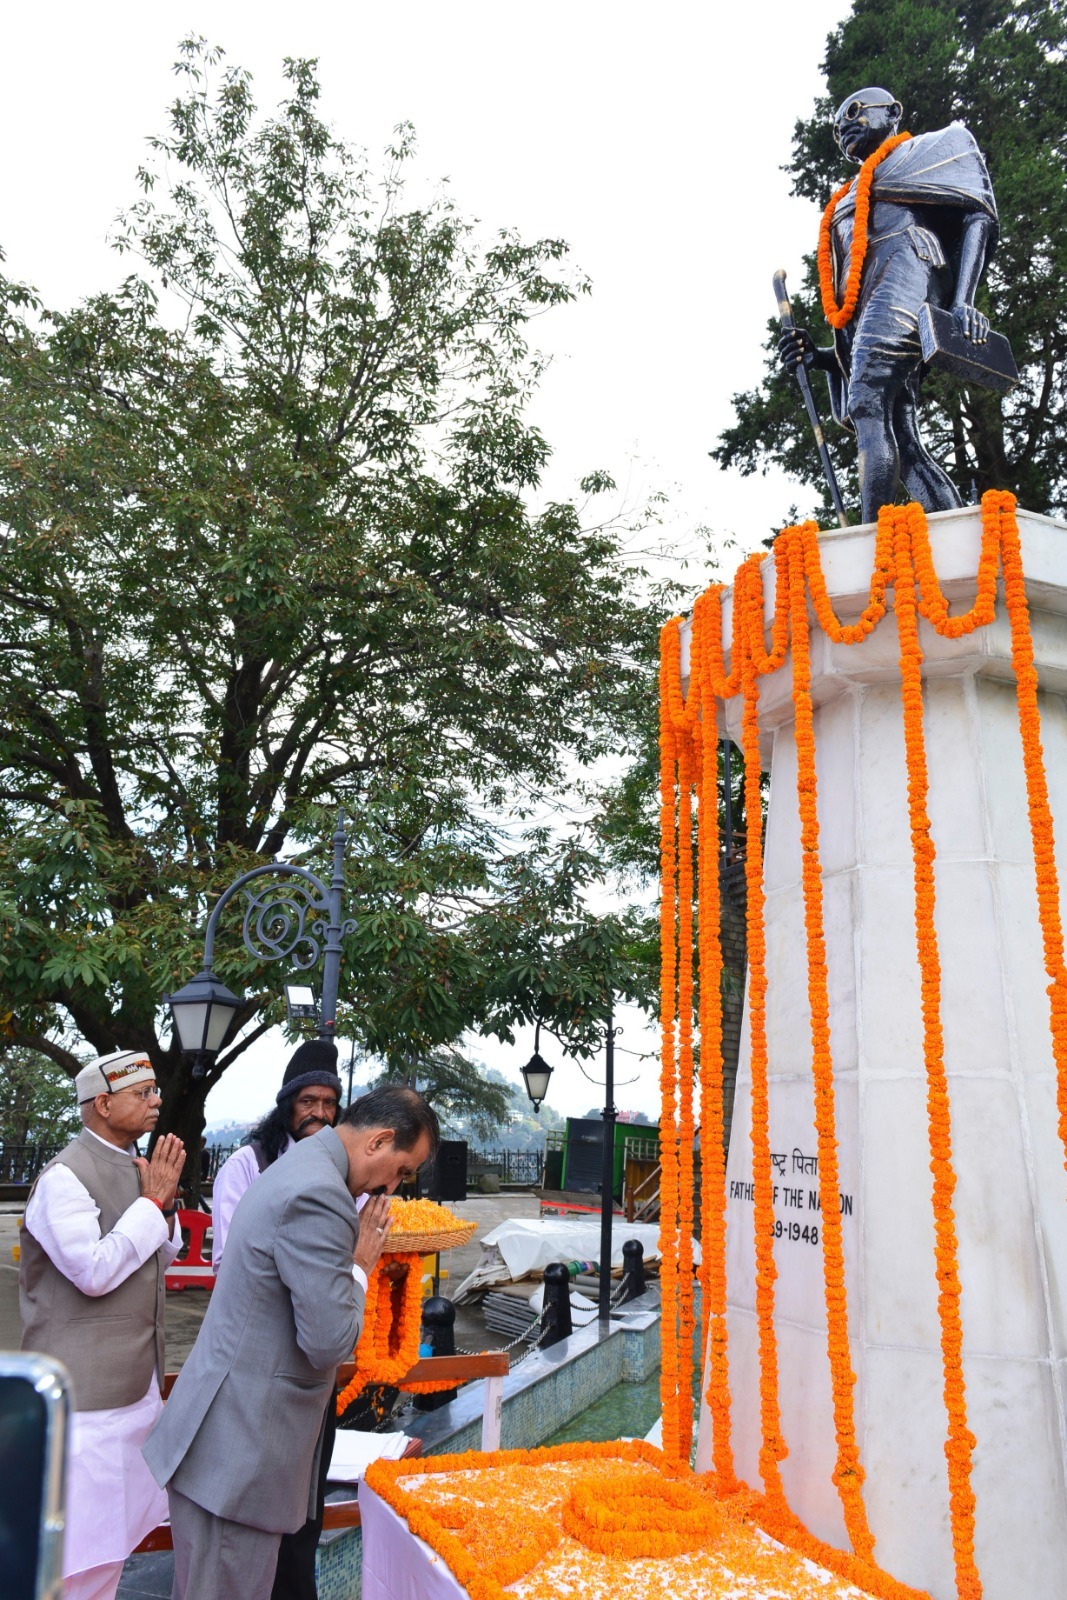 Cm paystributes to Mahatma Gandhi in Shimla 